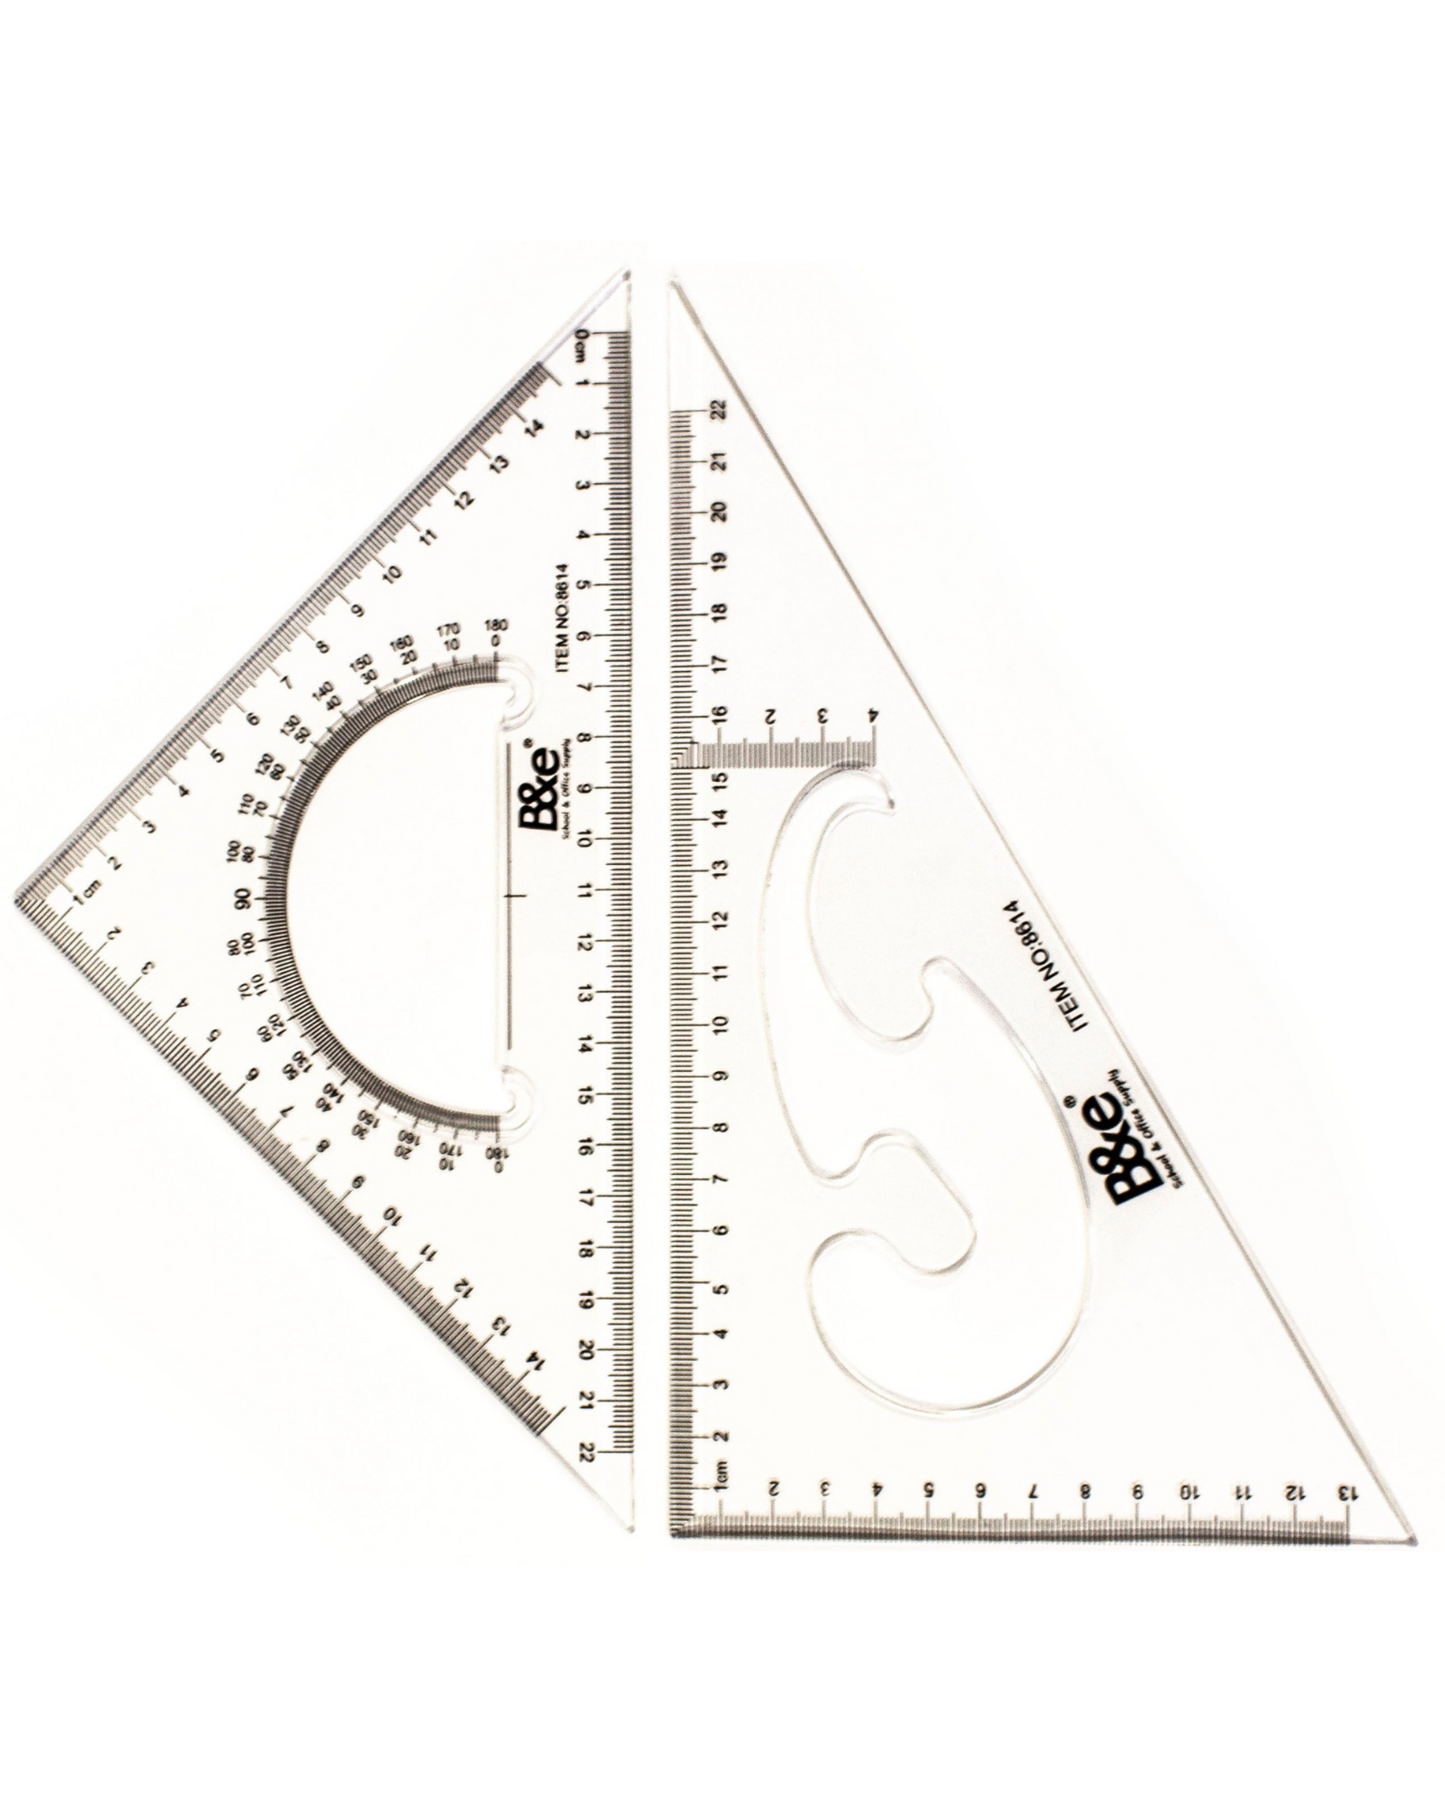 B&e Triangle Ruler Set No. 8614 (30/60,45/90,10in)